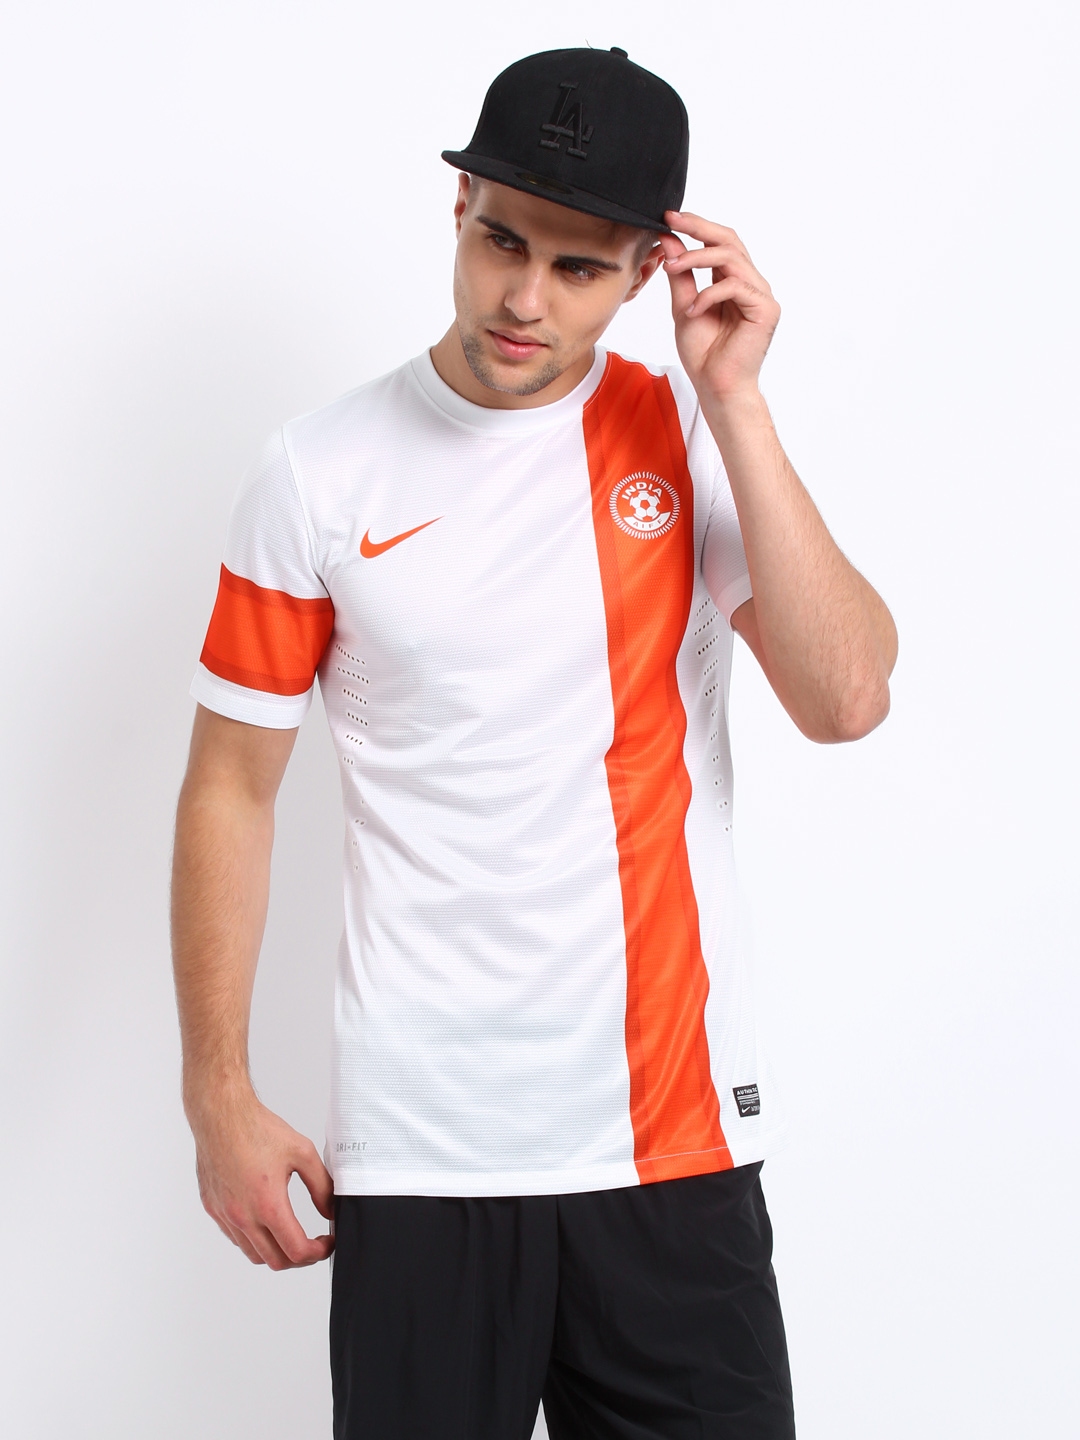 orange and white jersey